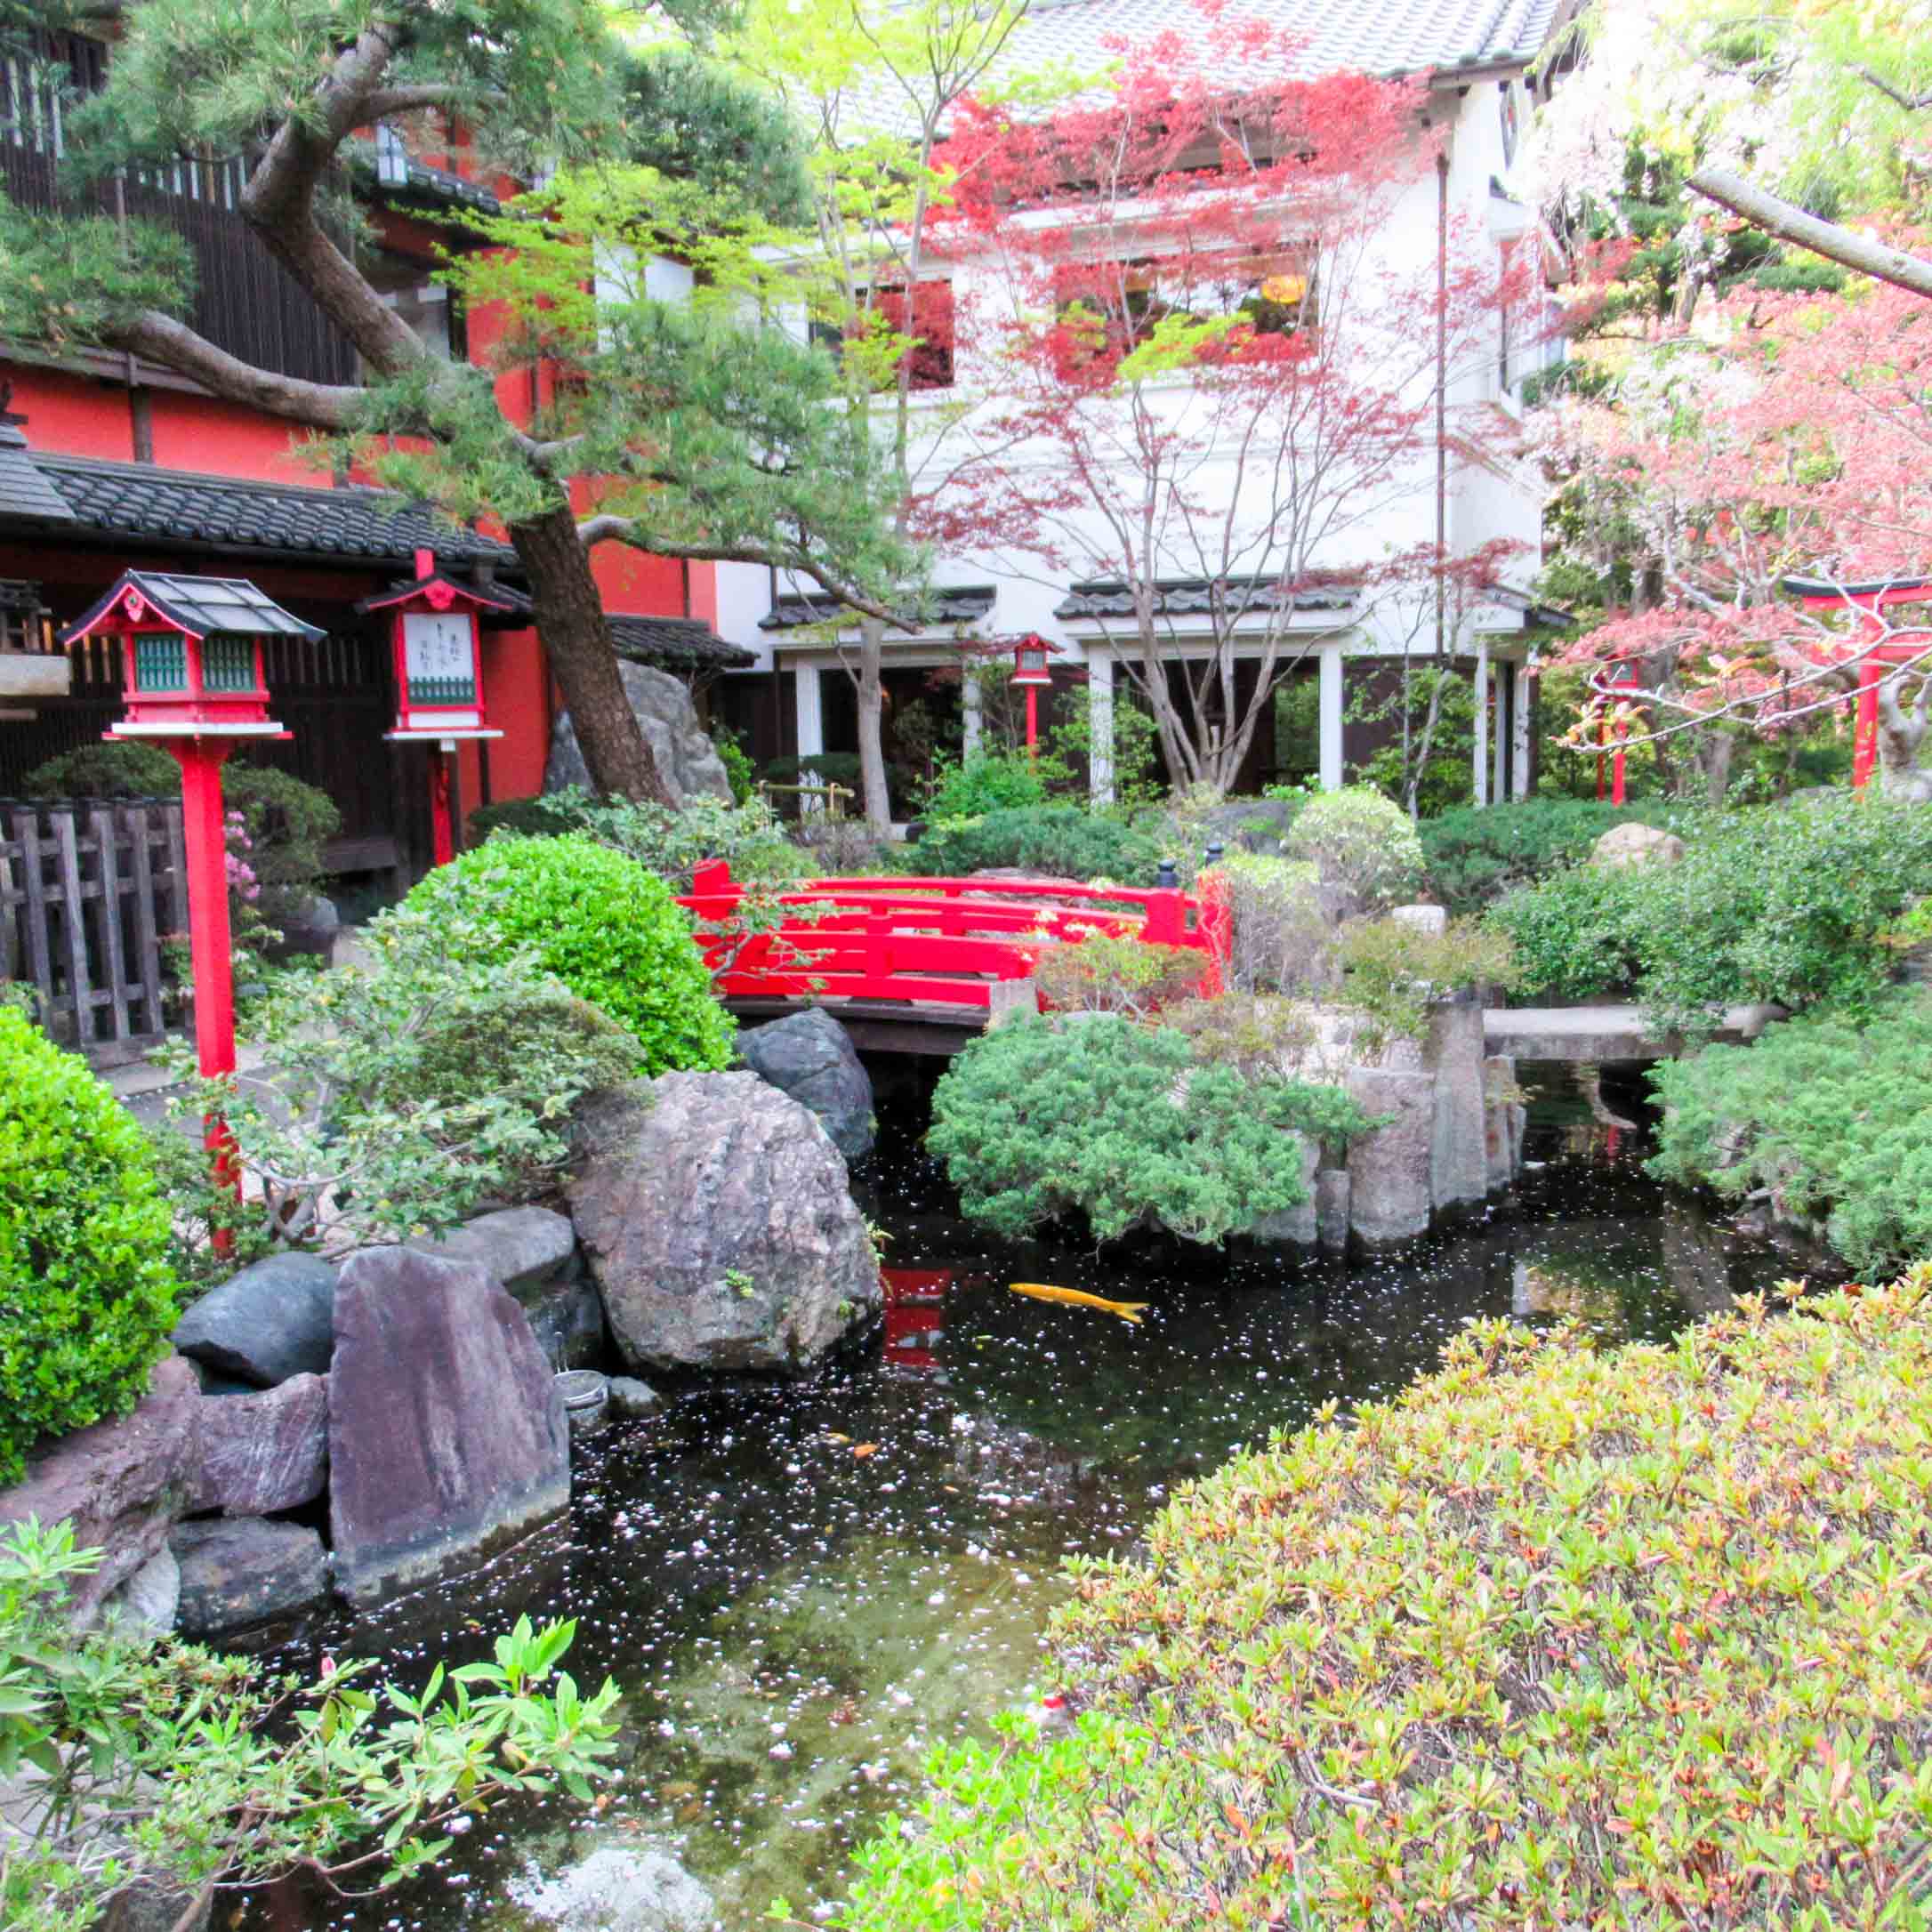 Stream with koi runs through garden in Japan